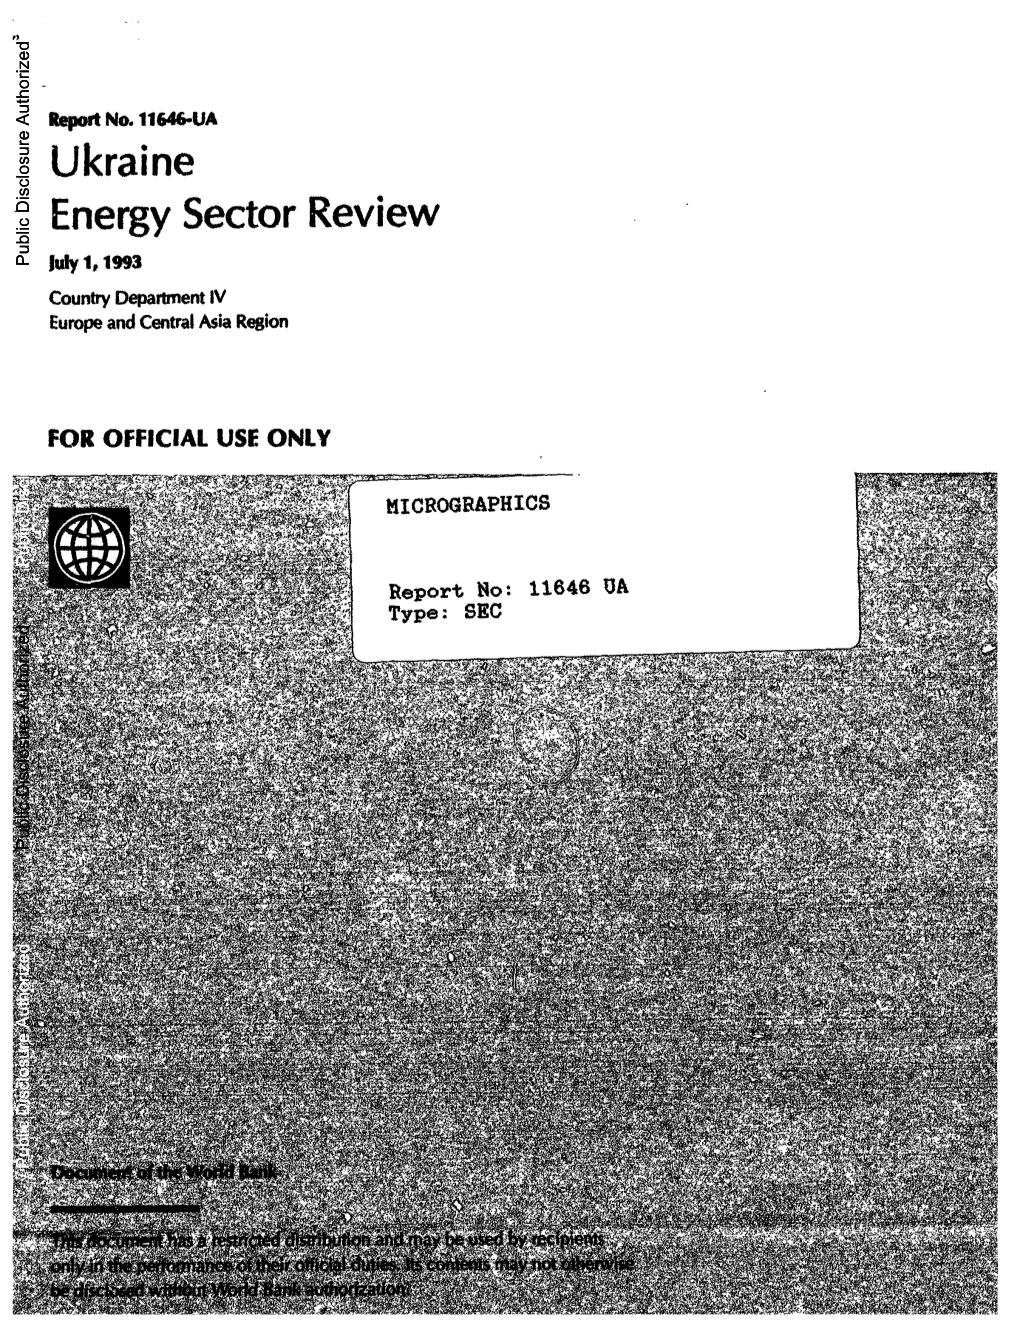 Ukraine Energy Sector Review